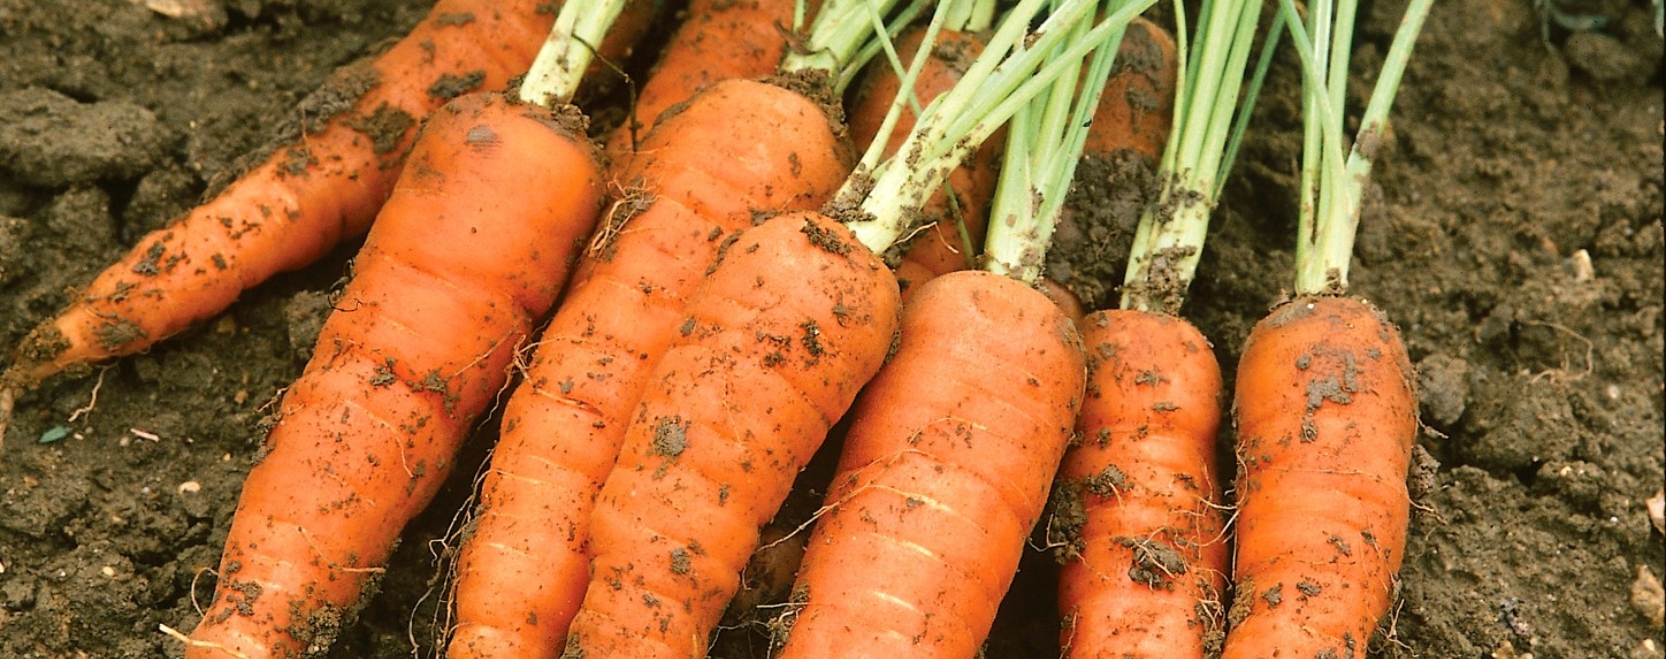 Carrots Grown From Unwins Seeds